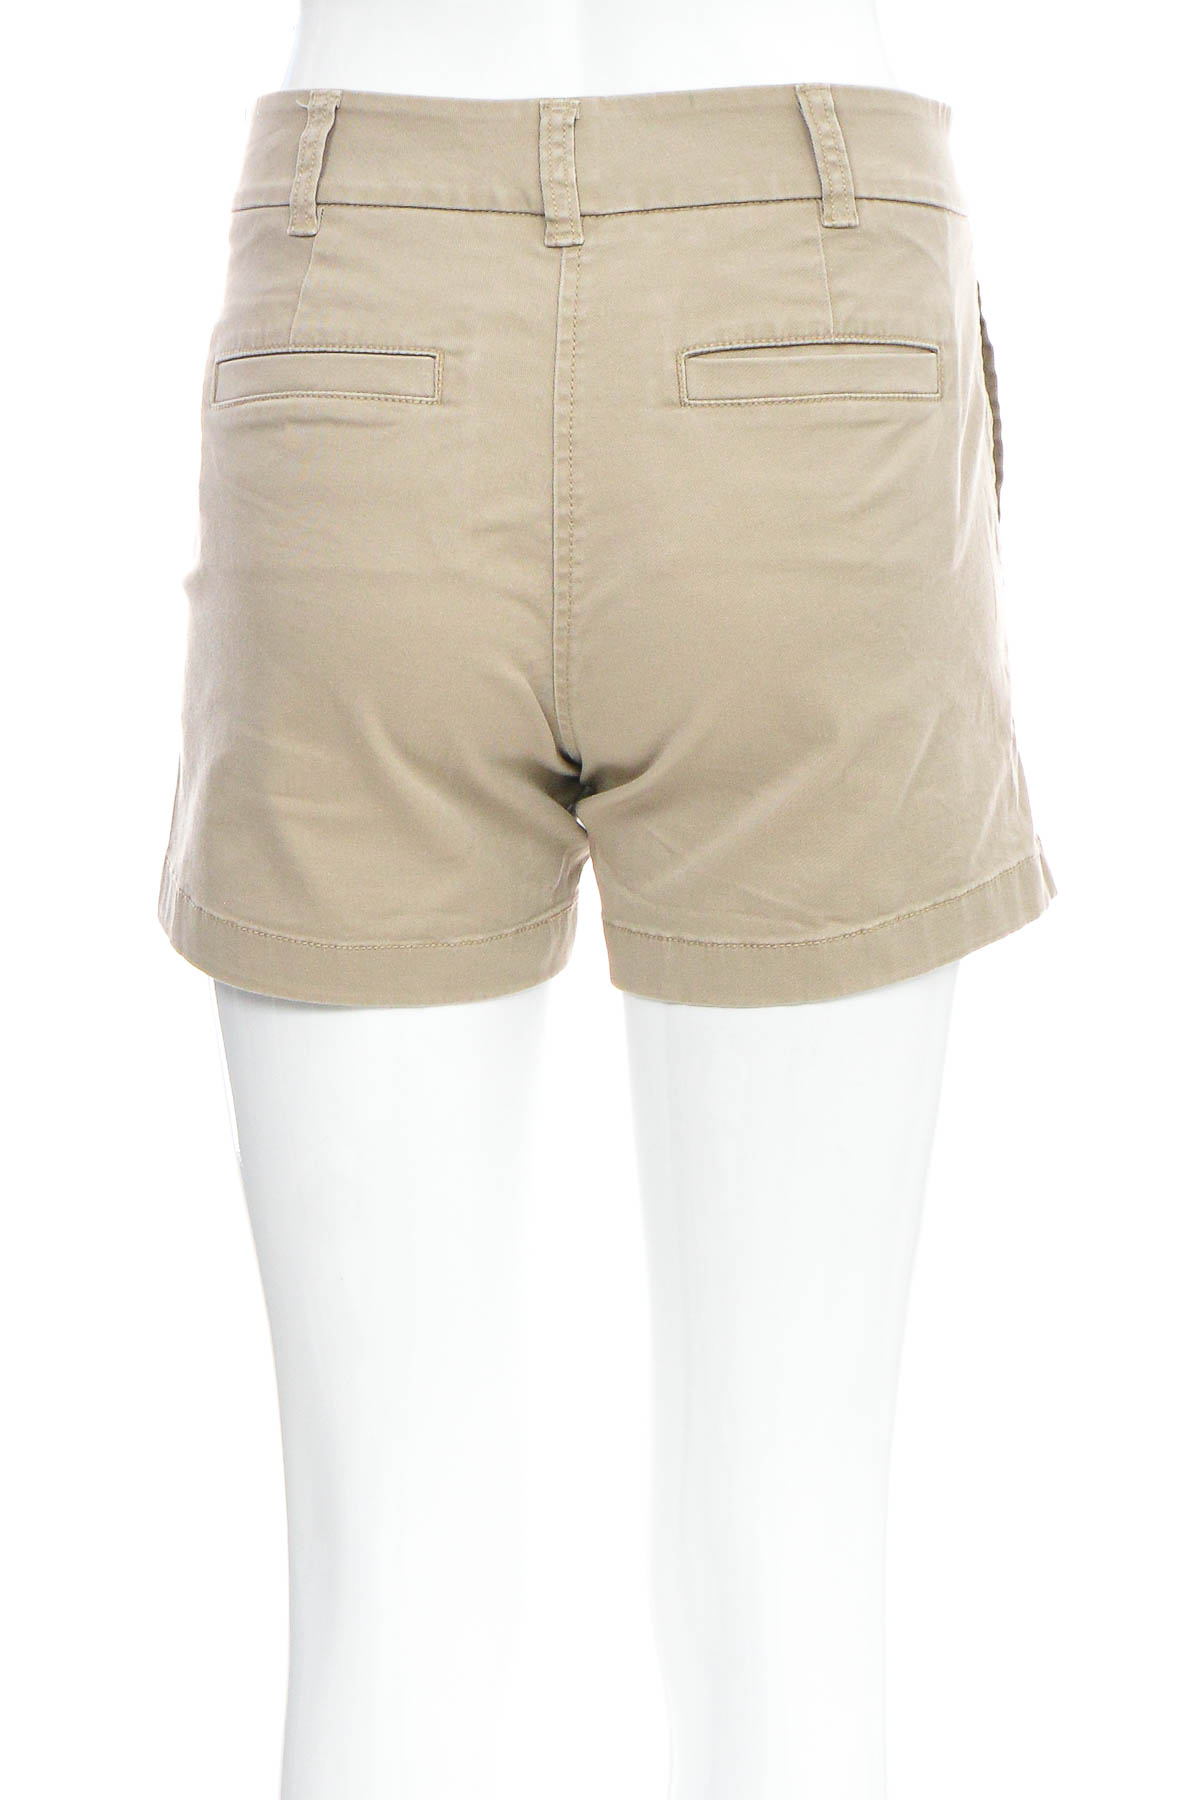 Female shorts - J.Crew - 1